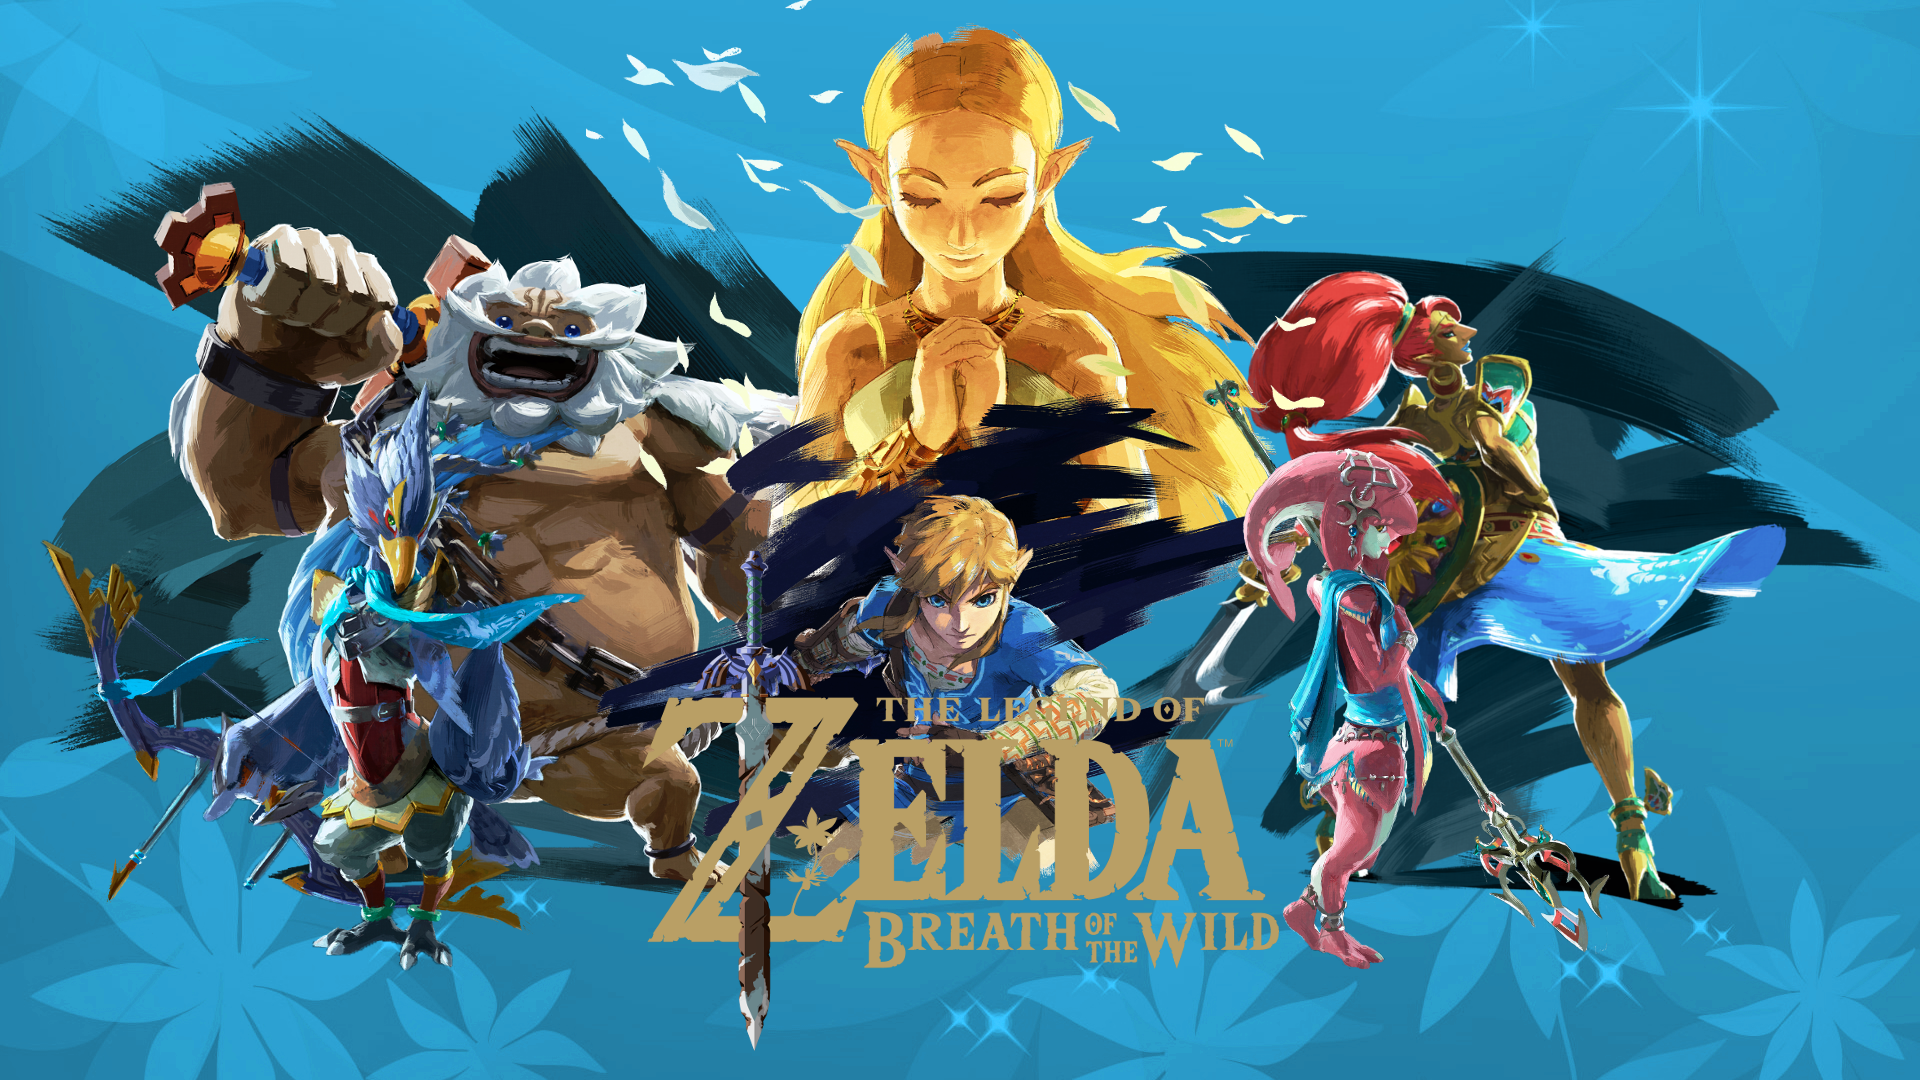 Video Game The Legend of Zelda: Breath of the Wild HD Wallpaper